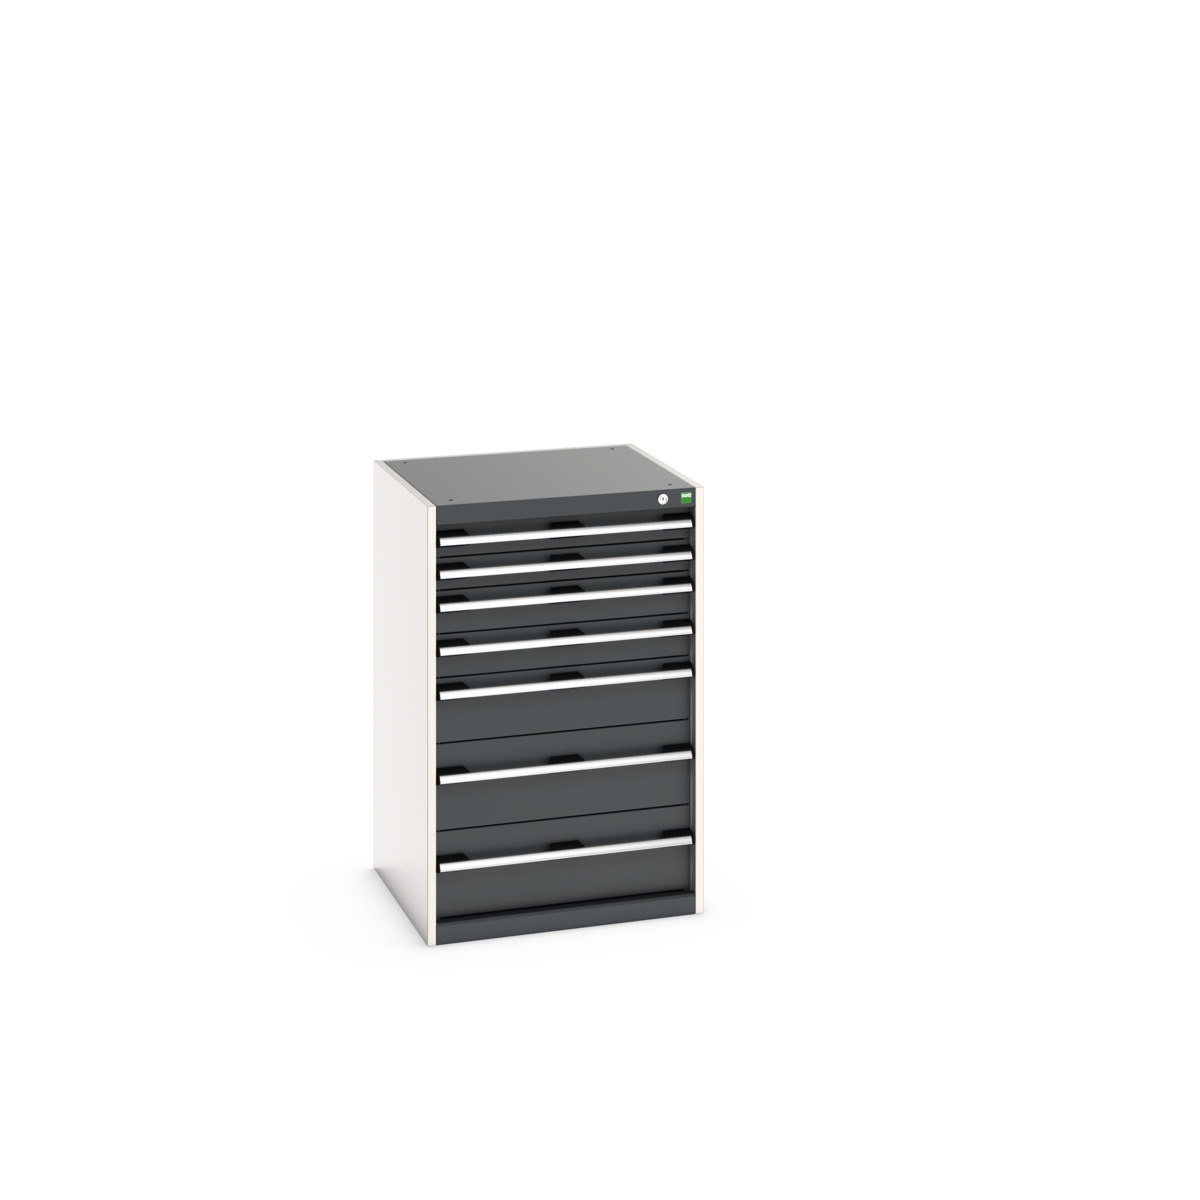 40019063. - cubio drawer cabinet